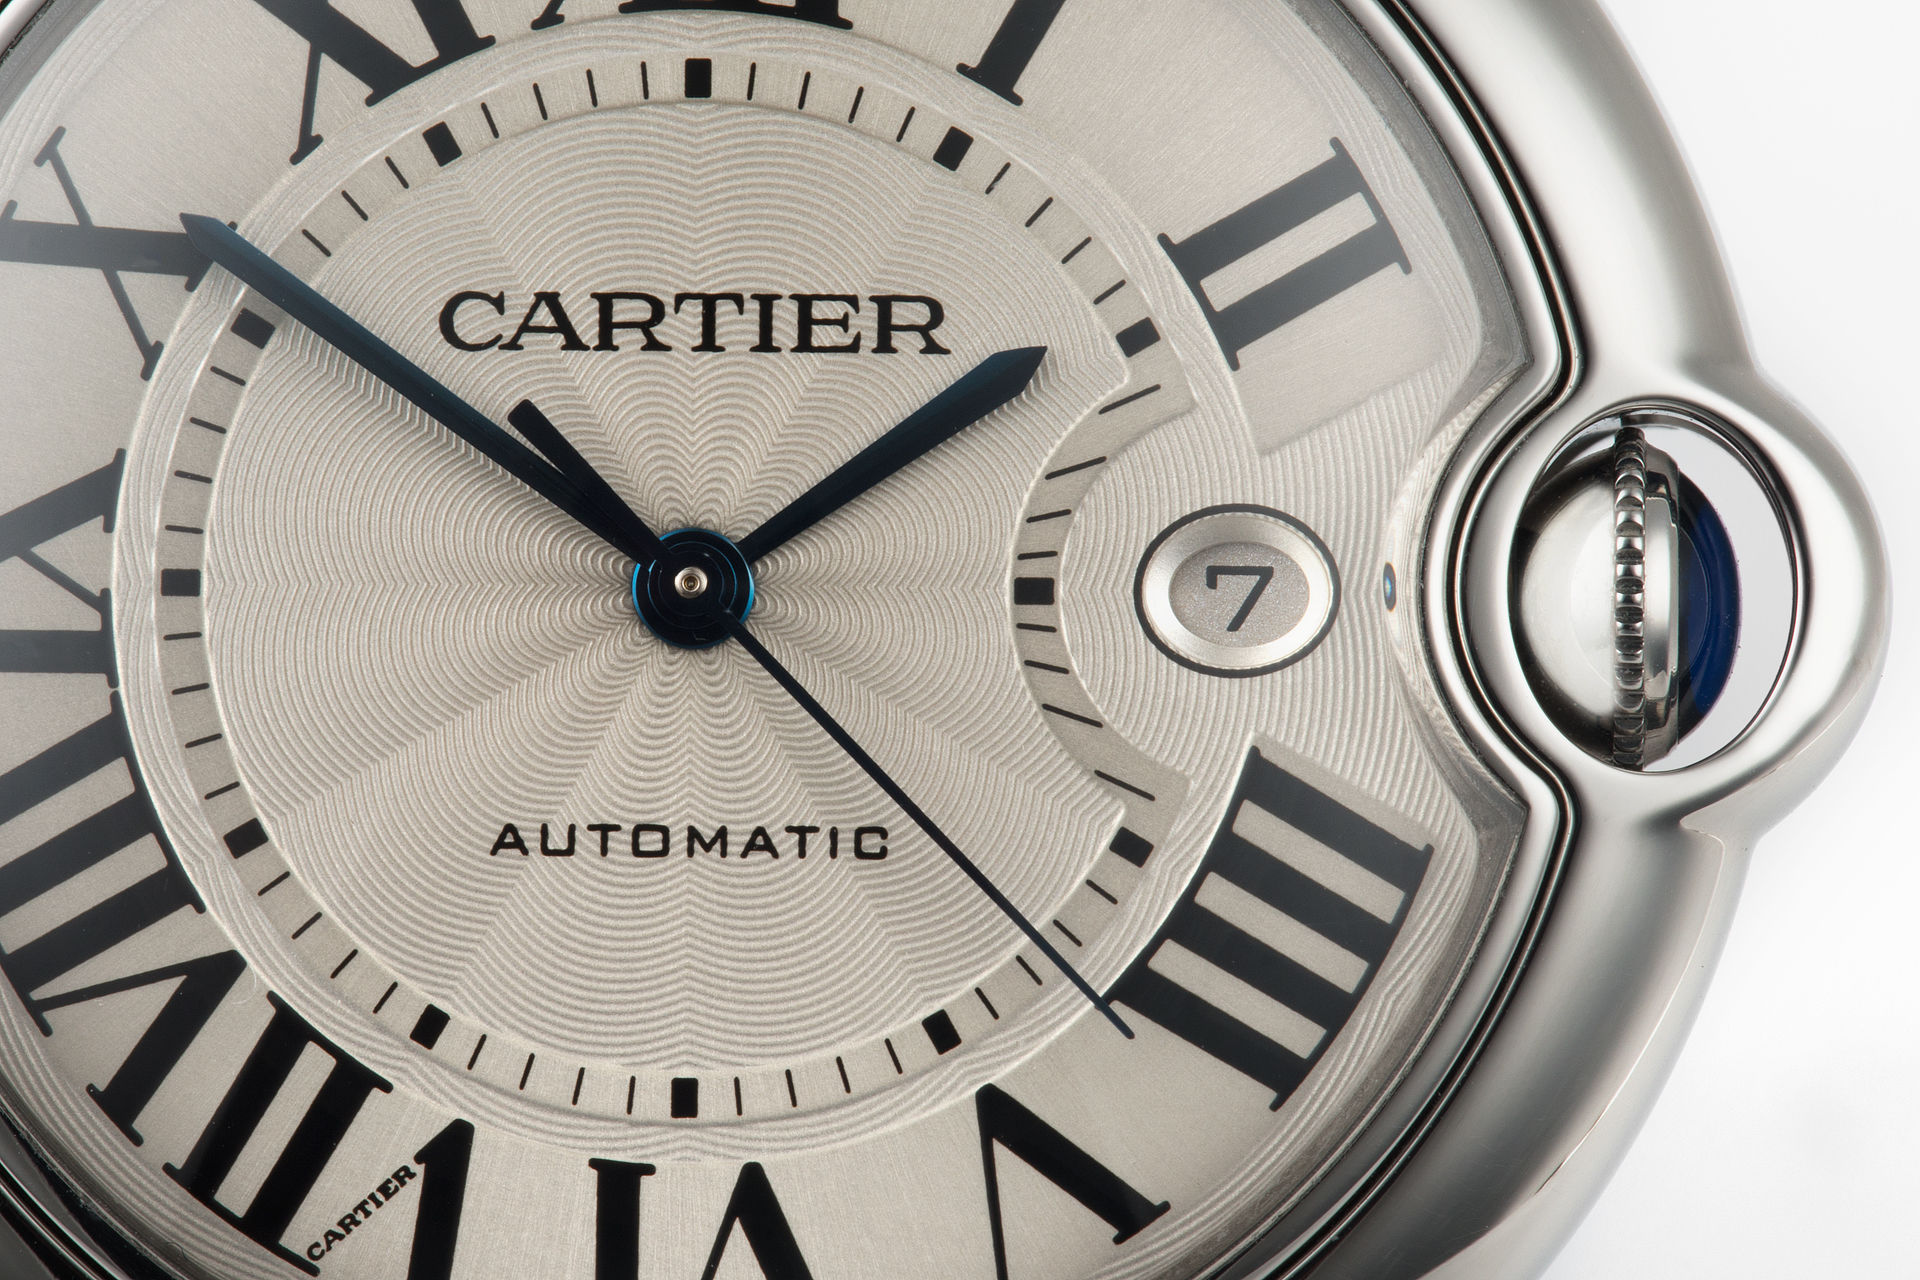 ref W69012Z4 | Automatic 'Full Set' | Cartier Ballon Bleu